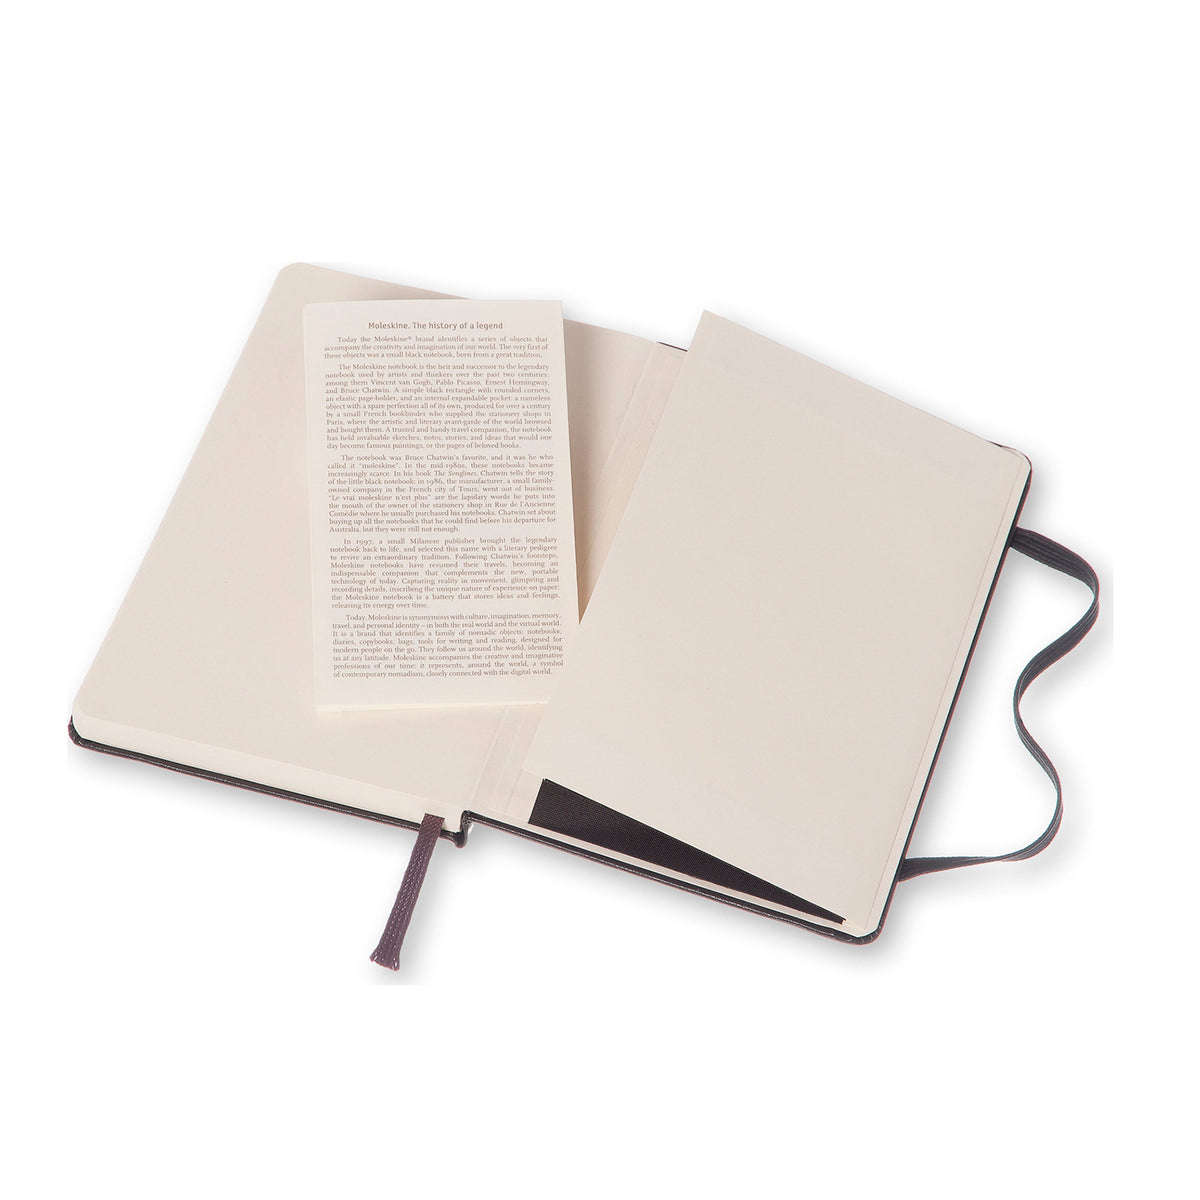 Moleskine - Classic Hard Cover Notebook - Dot Grid - Pocket - Black